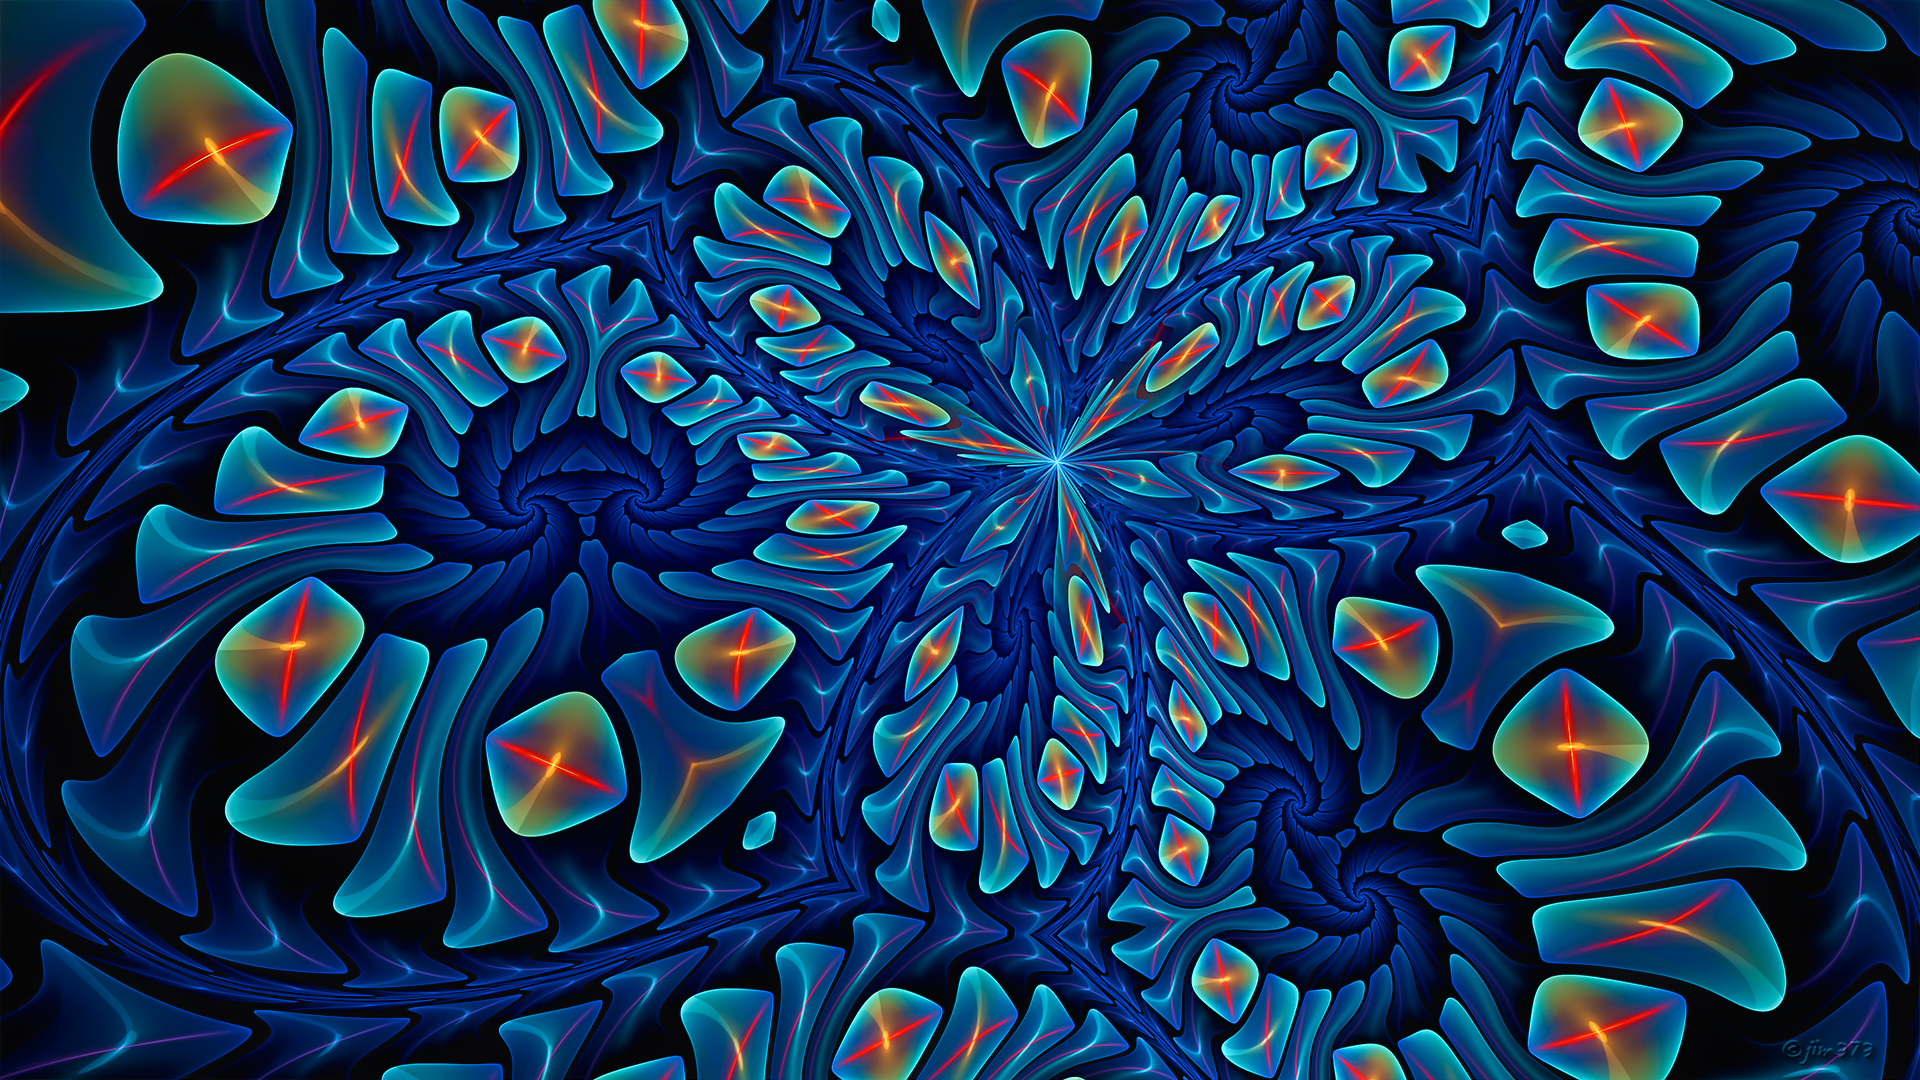 General 1920x1080 abstract fractal digital art artwork watermarked